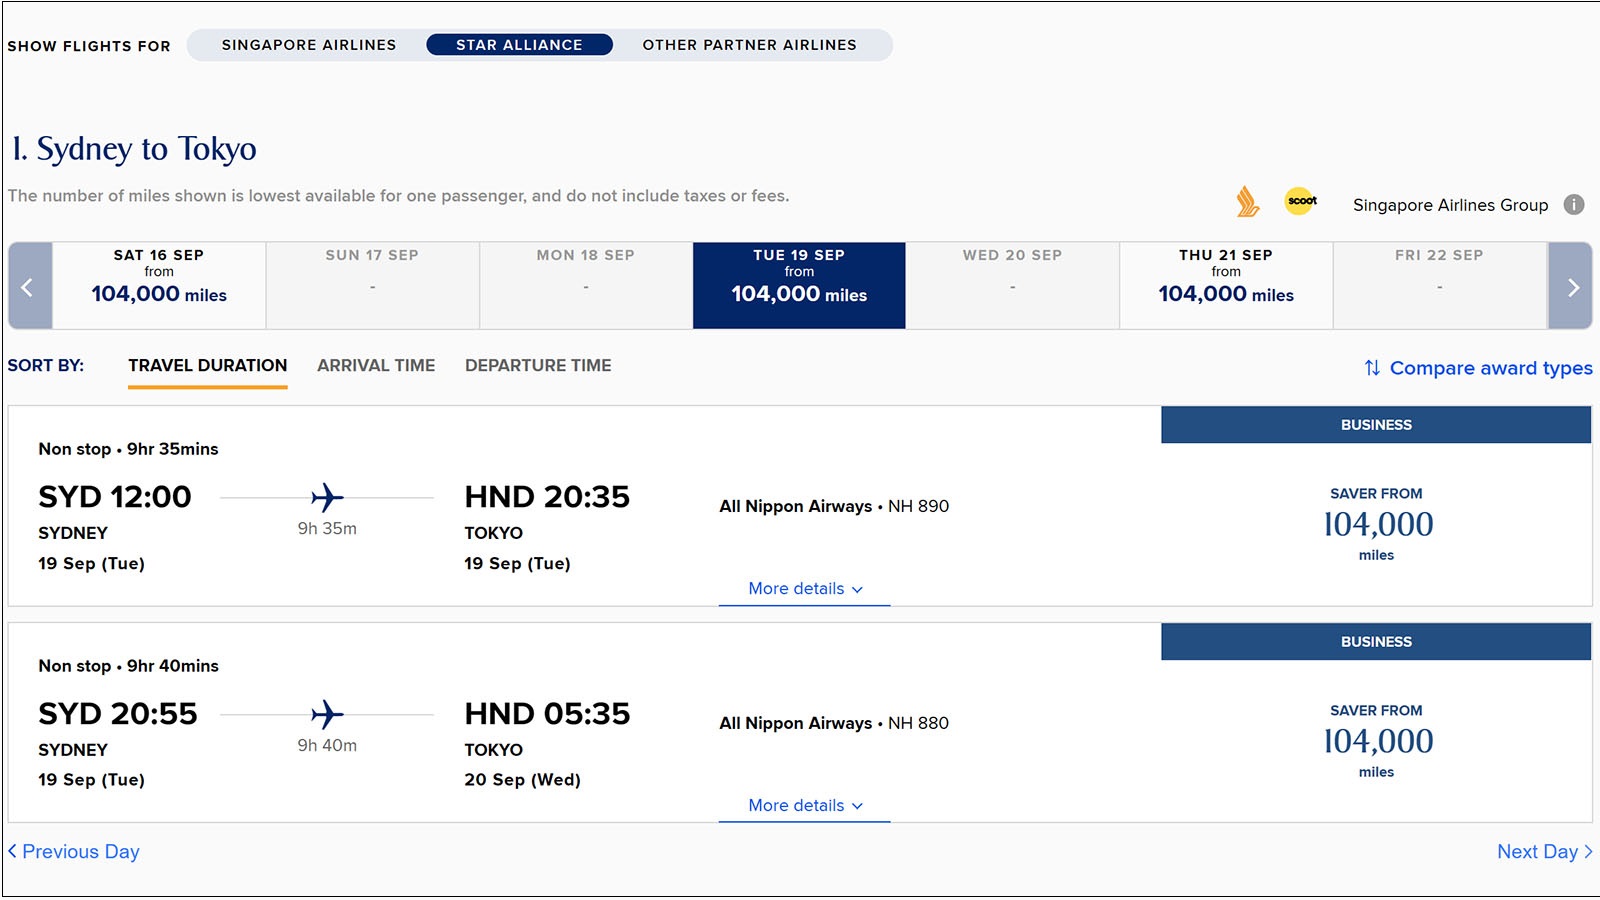 You can also book ANA reward flights through Singapore Airlines KrisFlyer